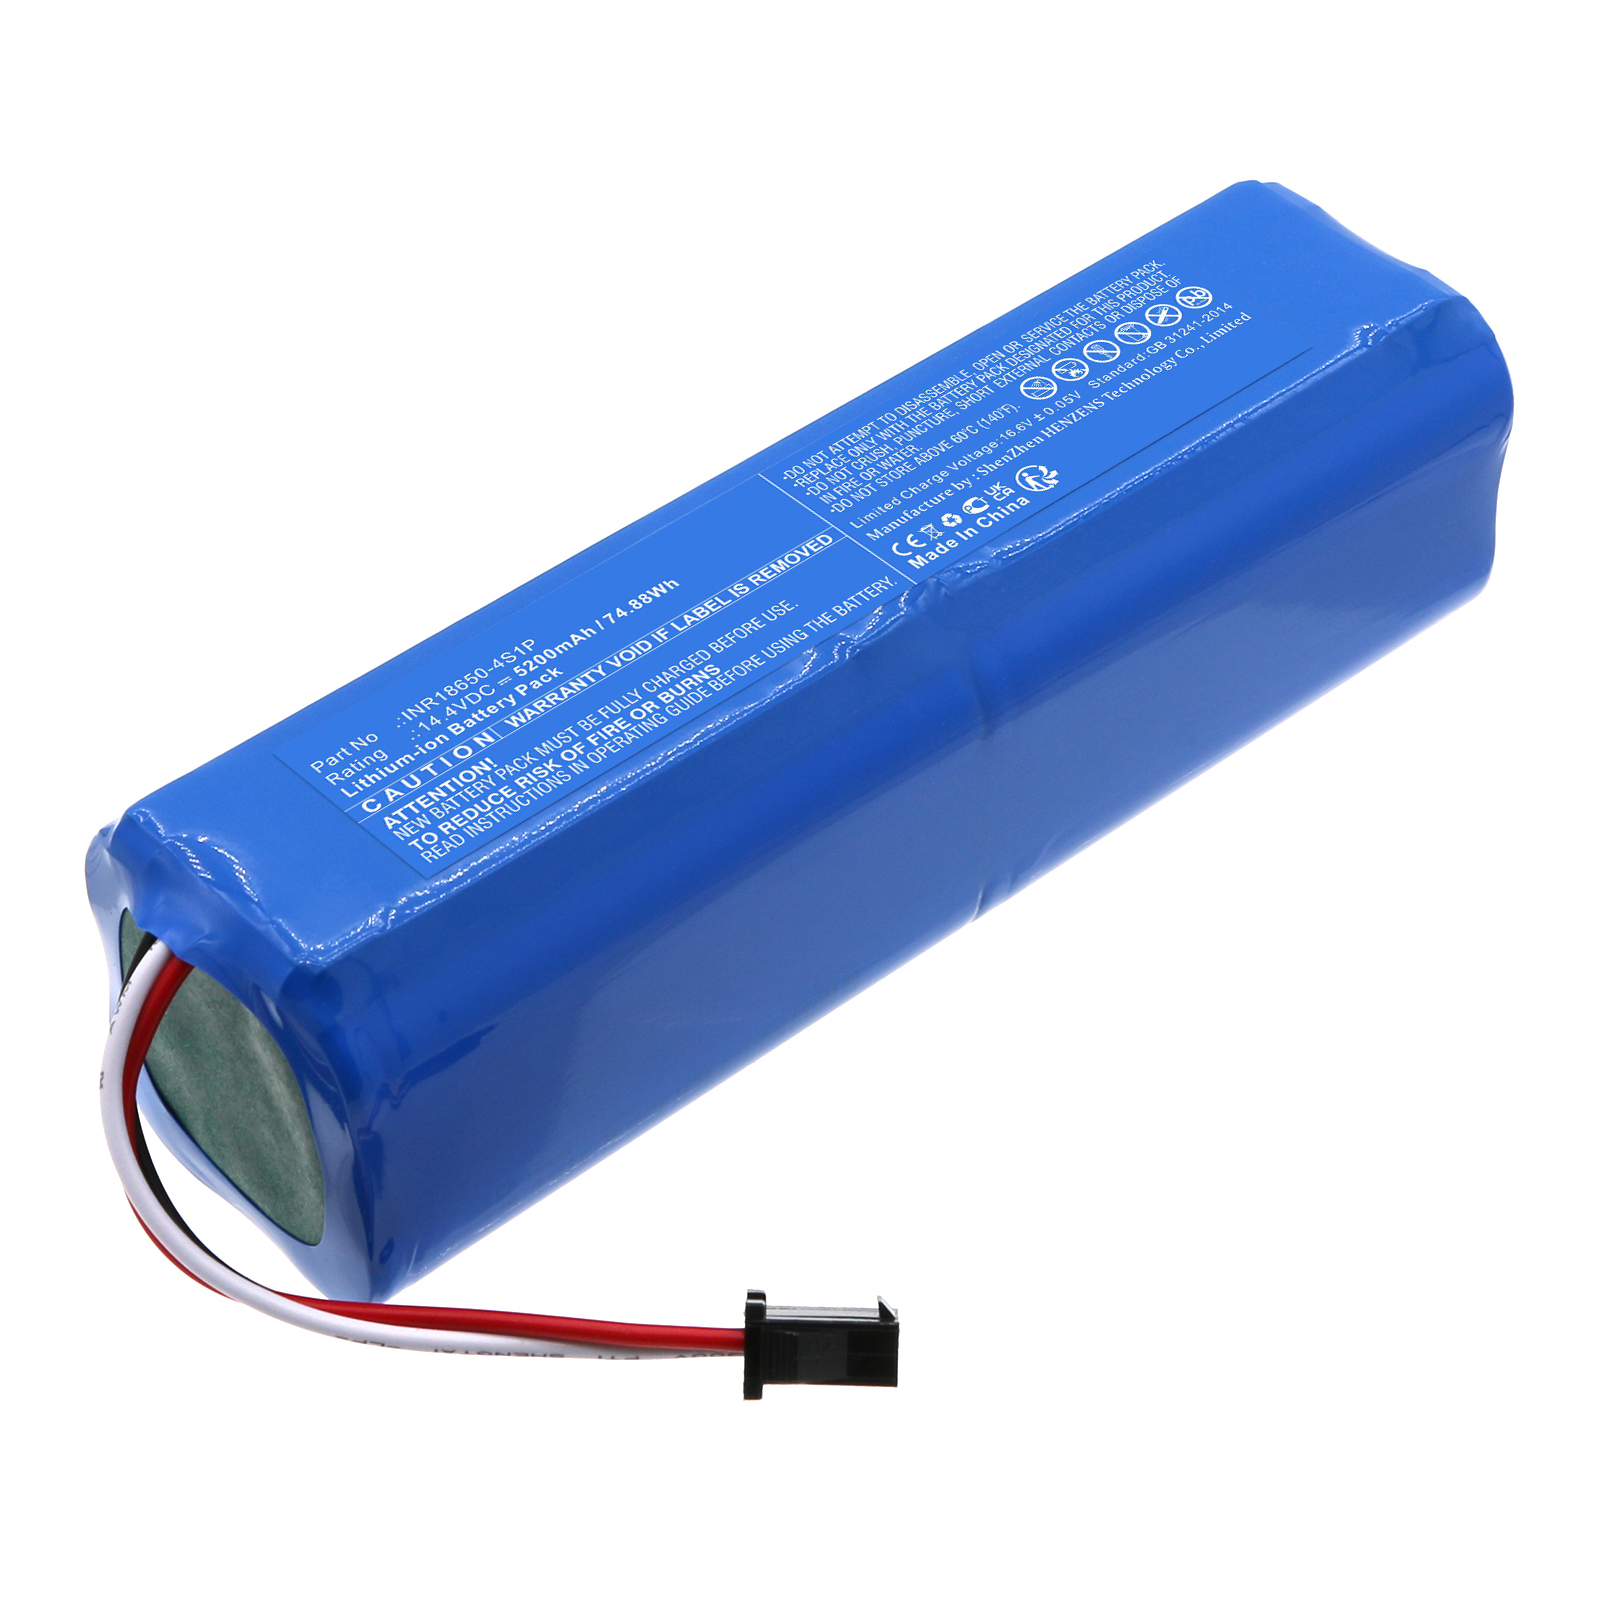 Synergy Digital Vacuum Cleaner Battery, Compatible with RoboJet INR18650-4S1P Vacuum Cleaner Battery (Li-ion, 14.4V, 5200mAh)